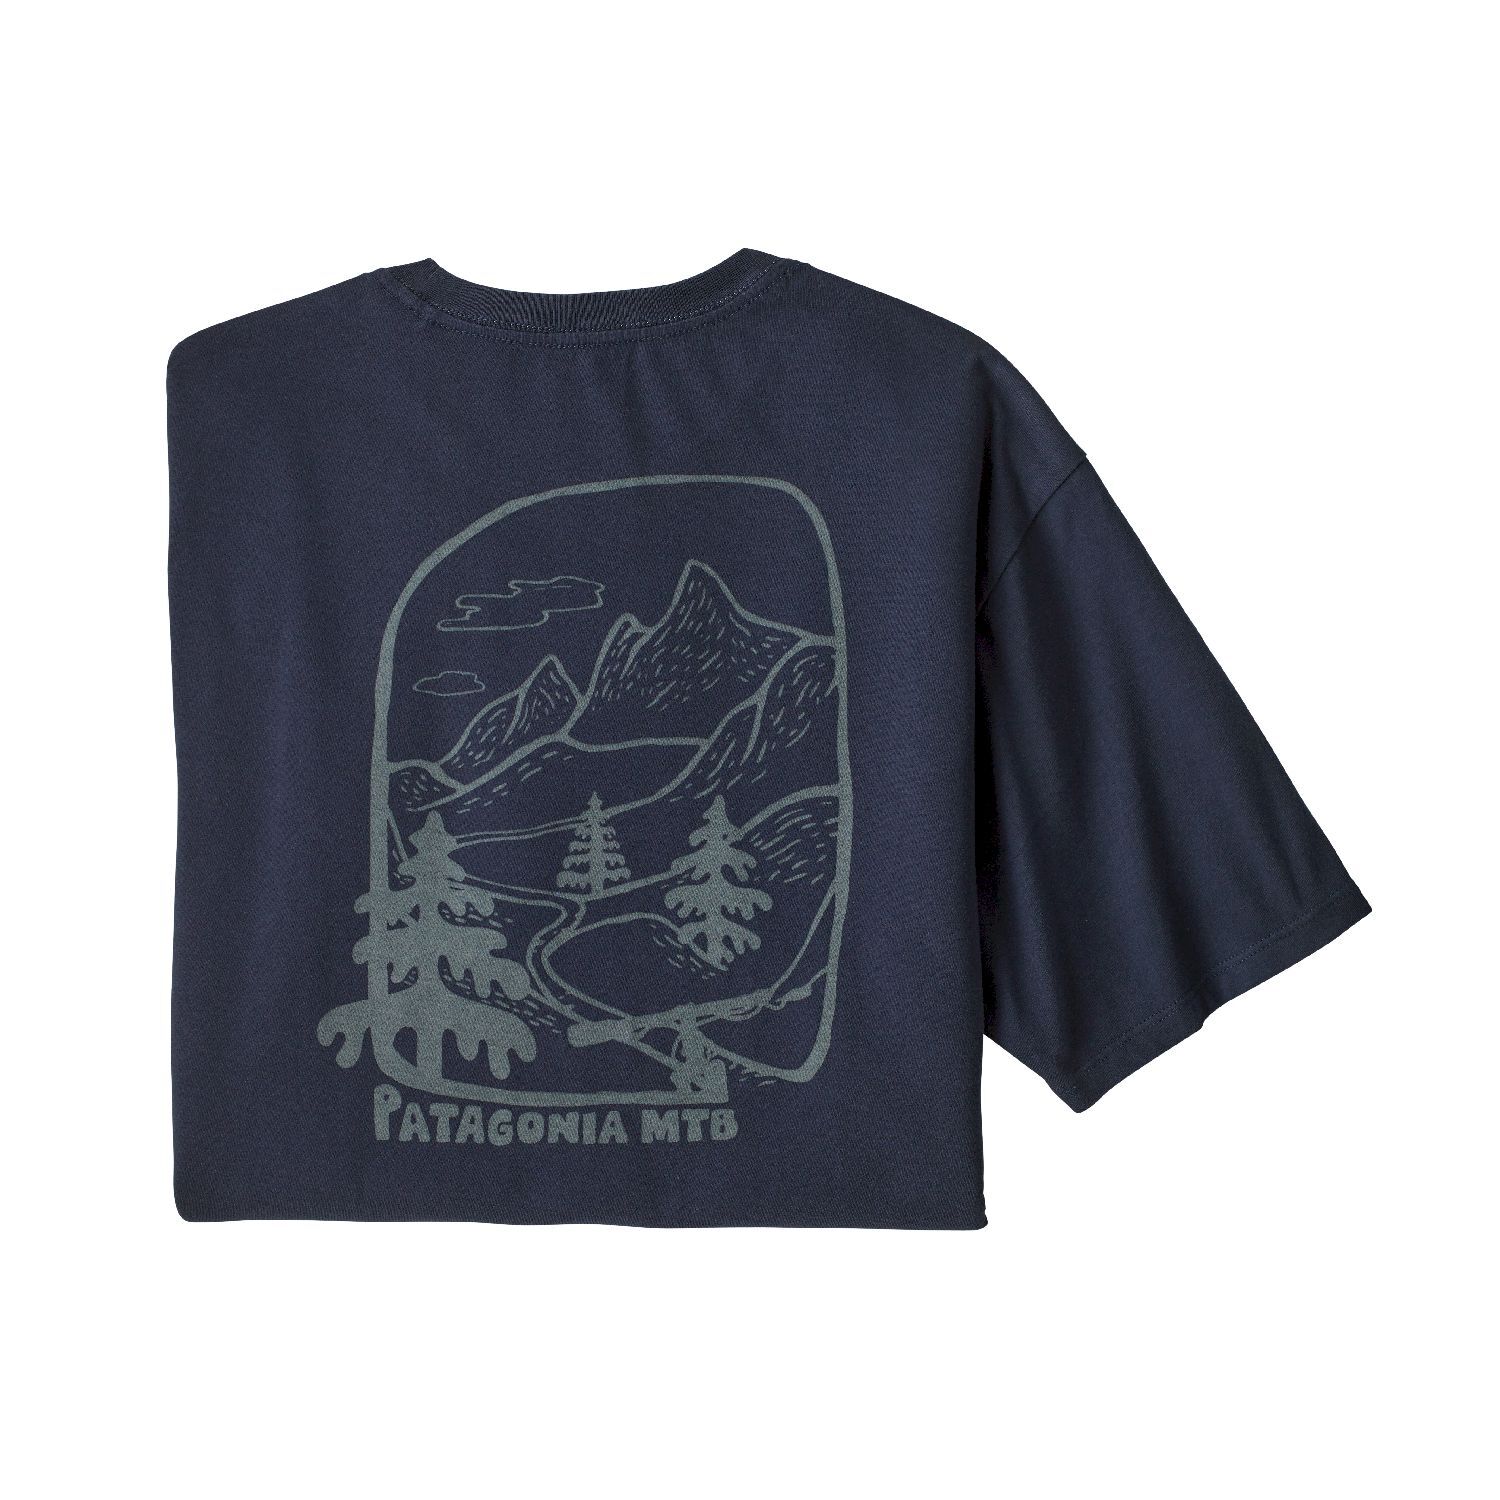 Patagonia Roam the Dirt Organic - T-Shirt - Herren